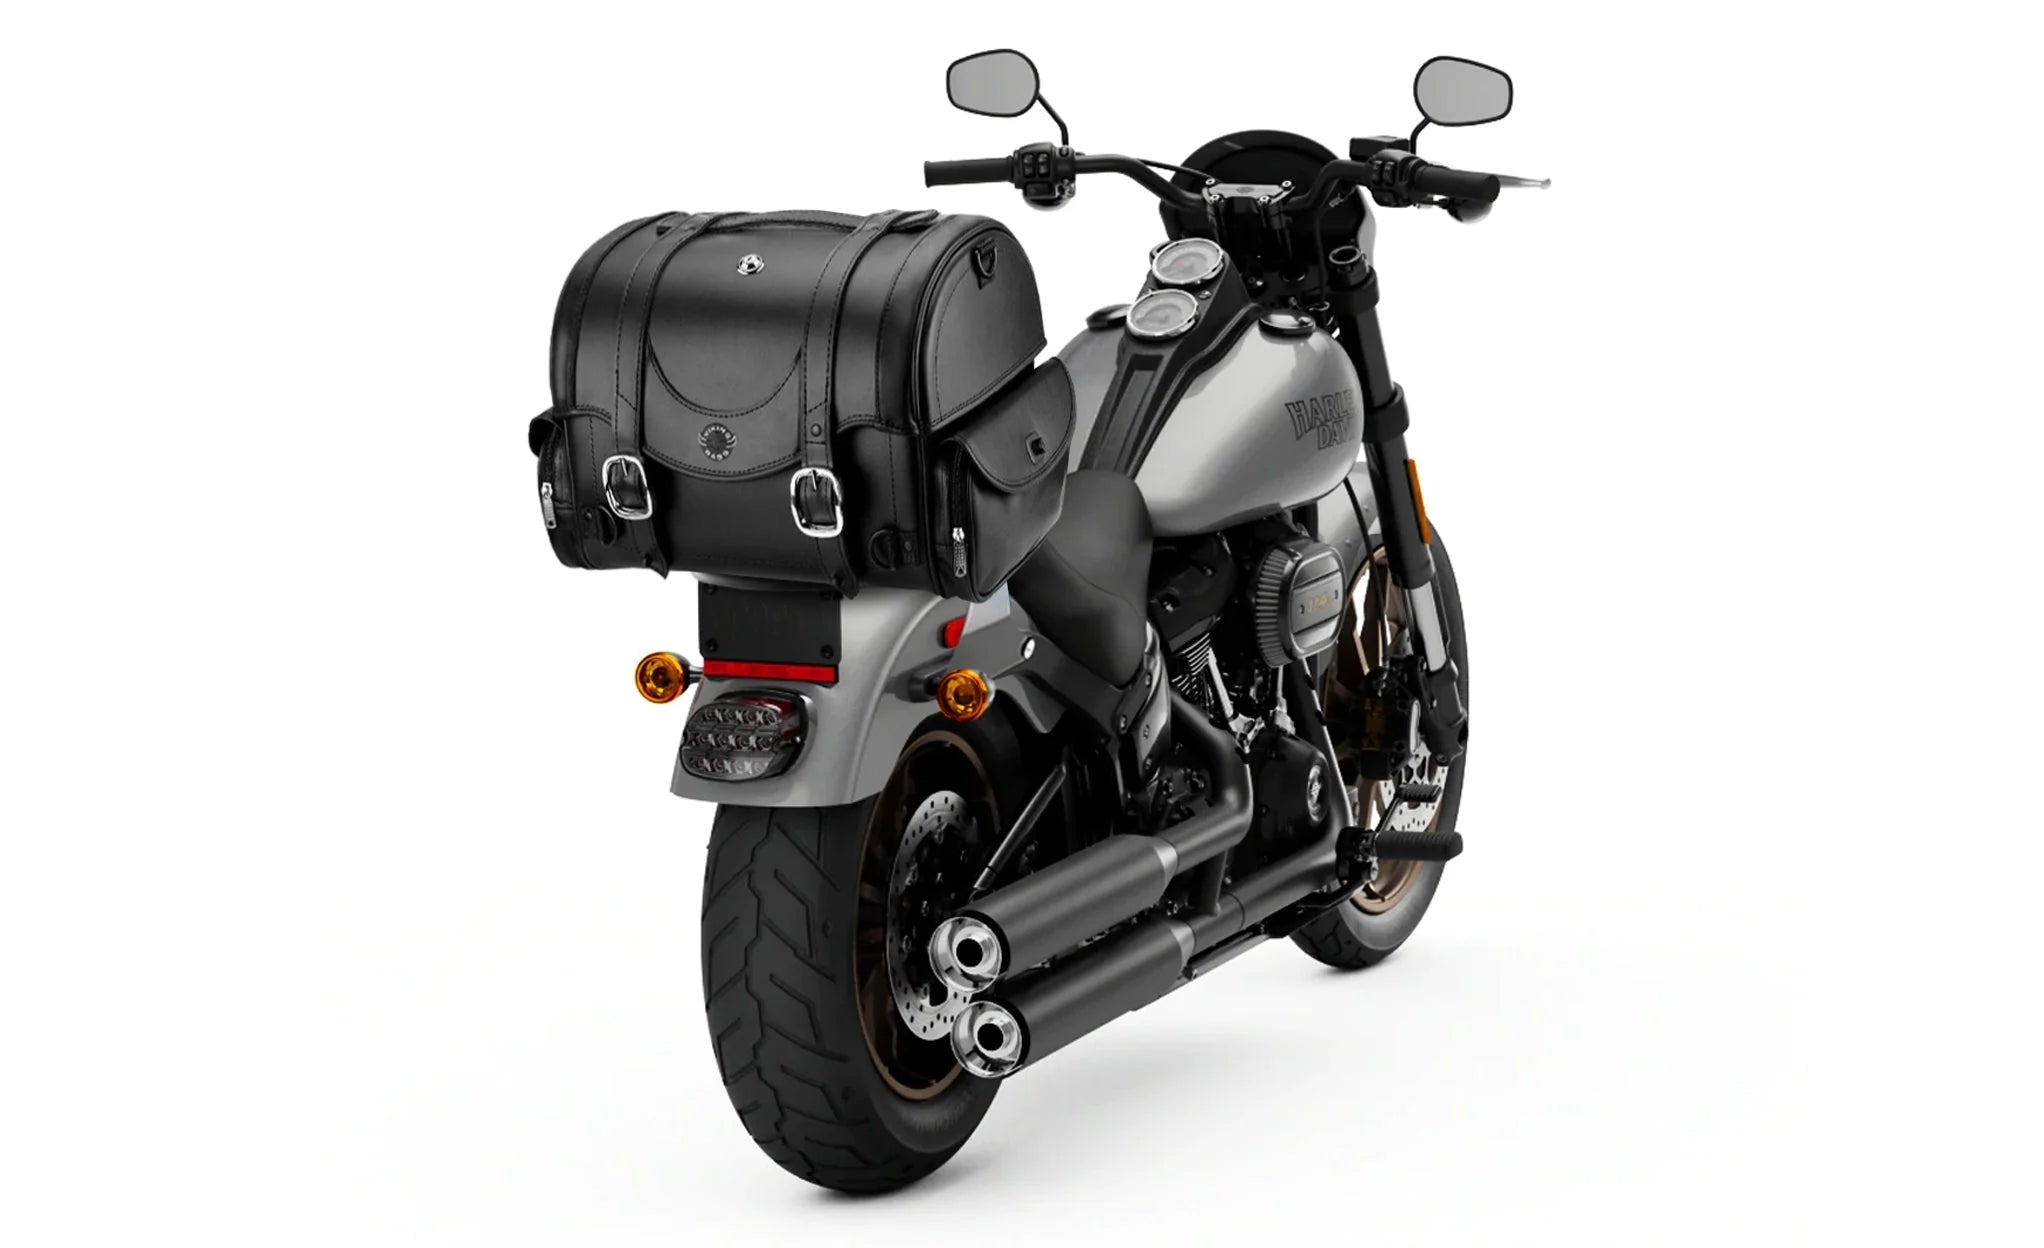 21L - Century Medium Victory Leather Motorcycle Sissy Bar Bag on Bike Photo @expand